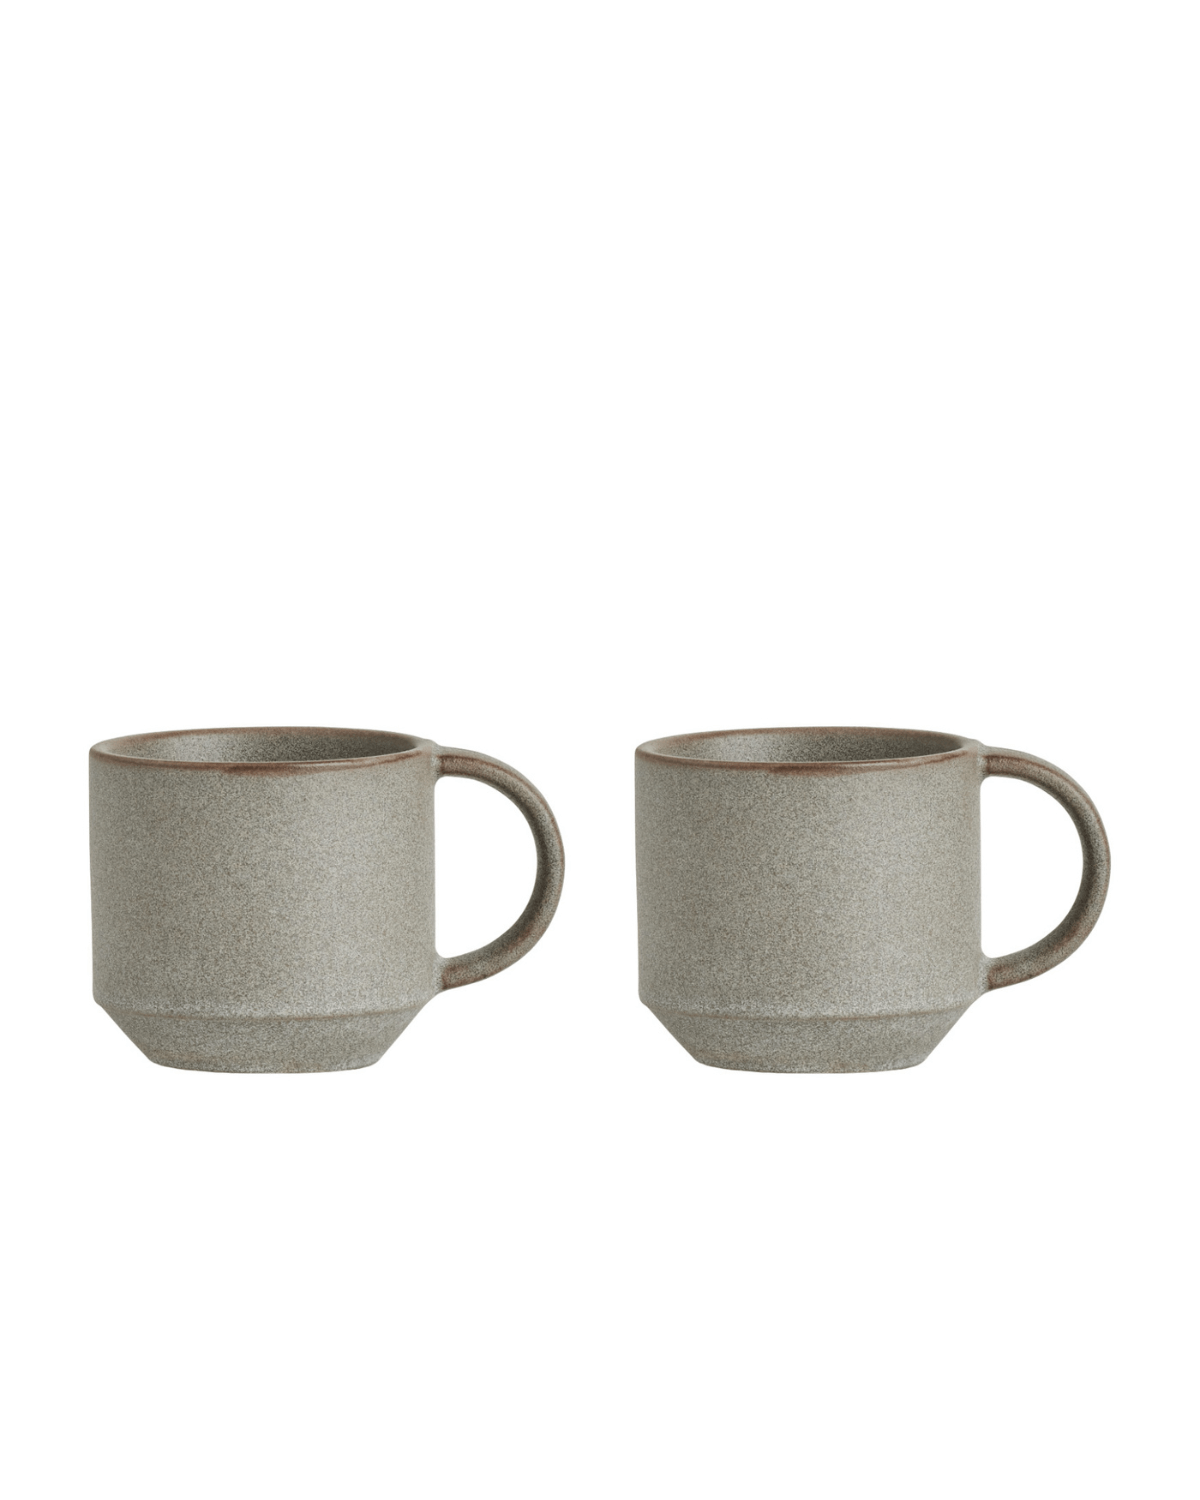 Kop, Keramik kop med hank, grå, stone, Yuka, OYOY Living Design